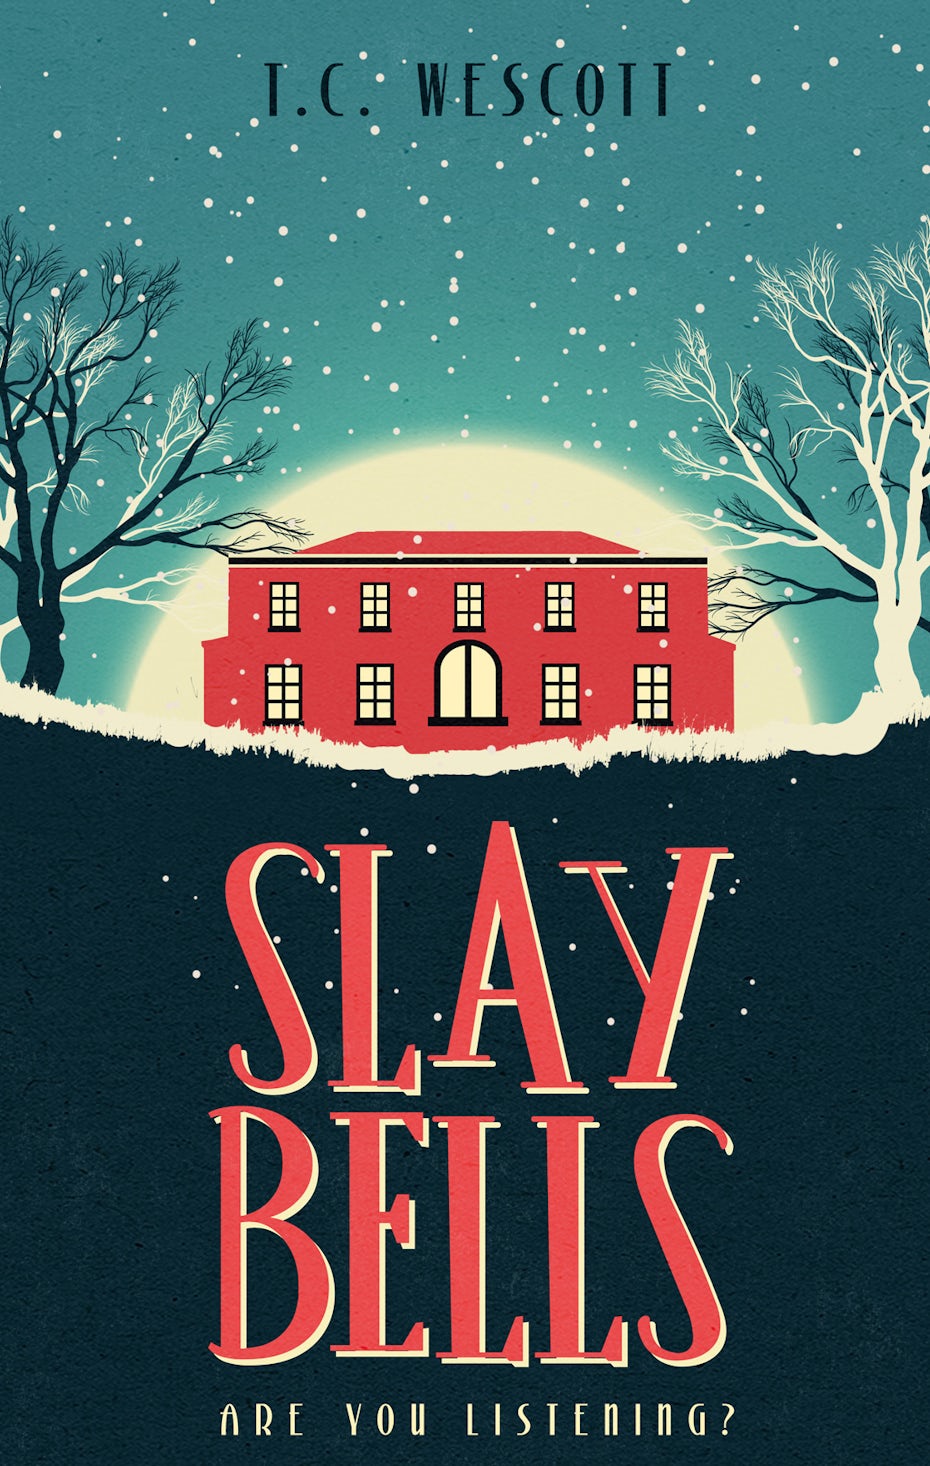 Slay bells book cover